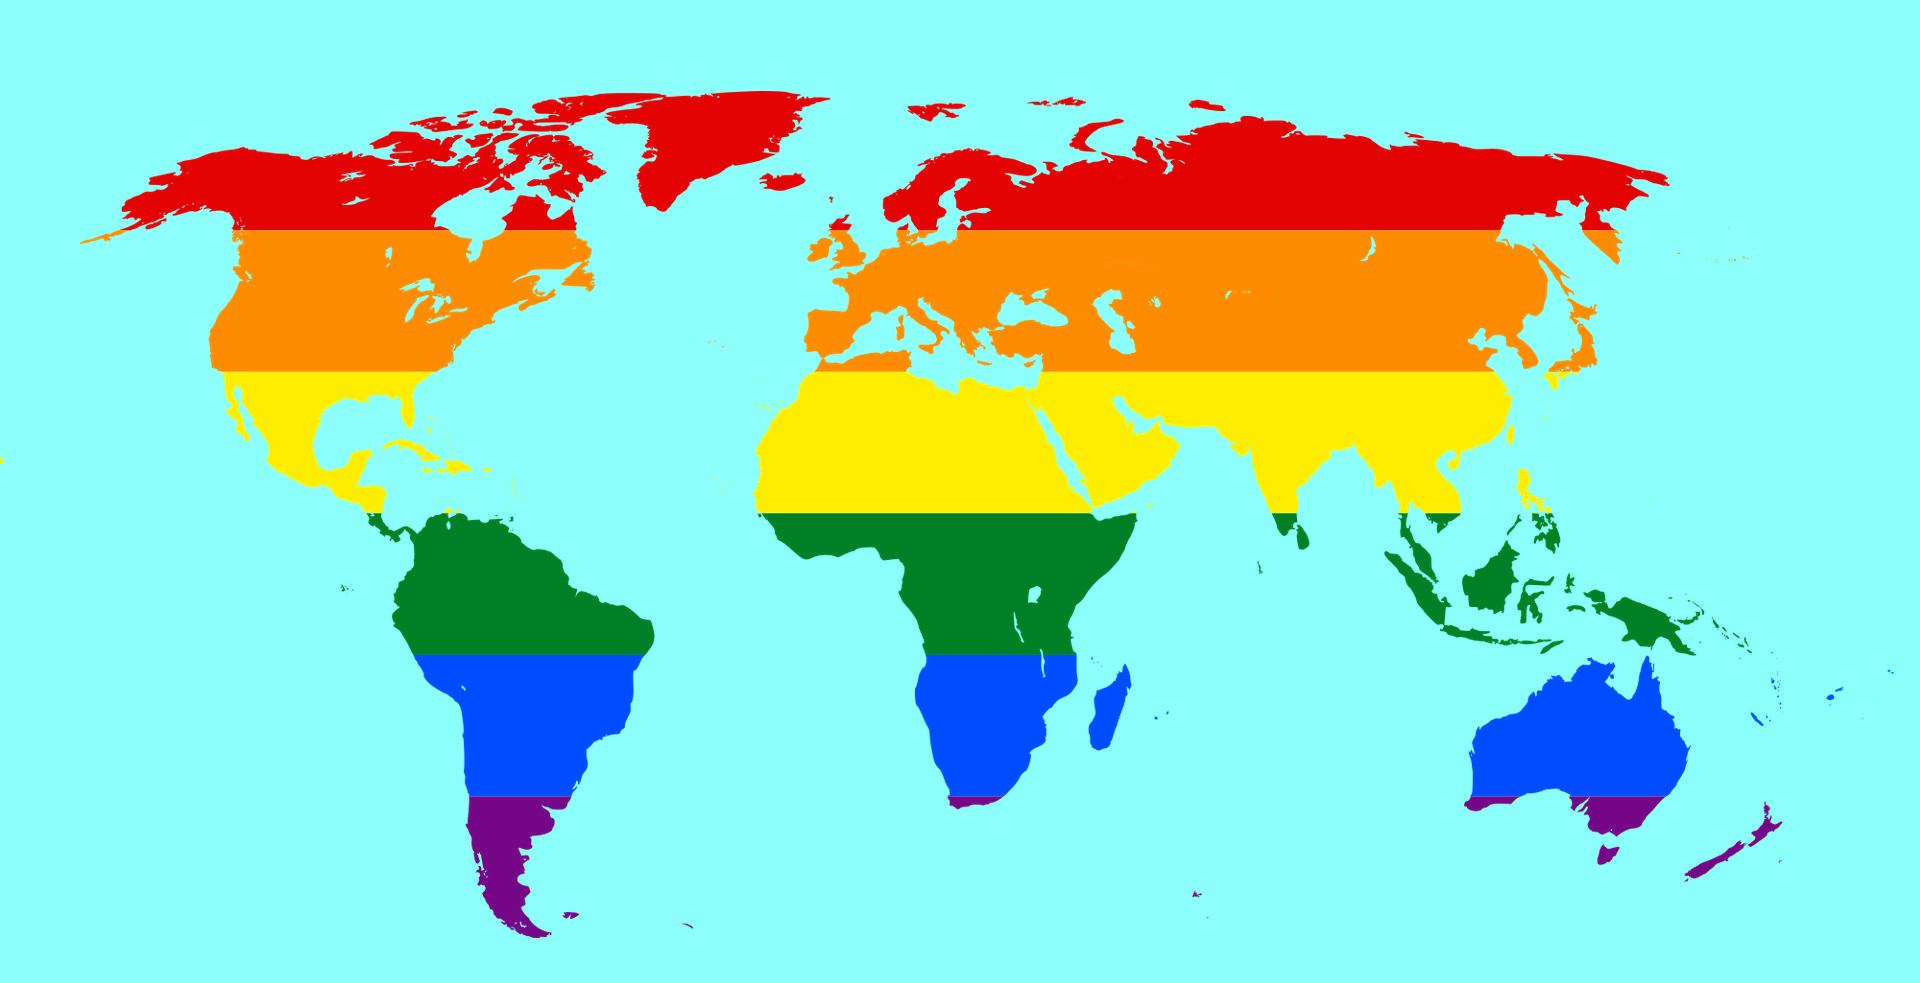 rainbow-world-map-1192306_1920-withBG